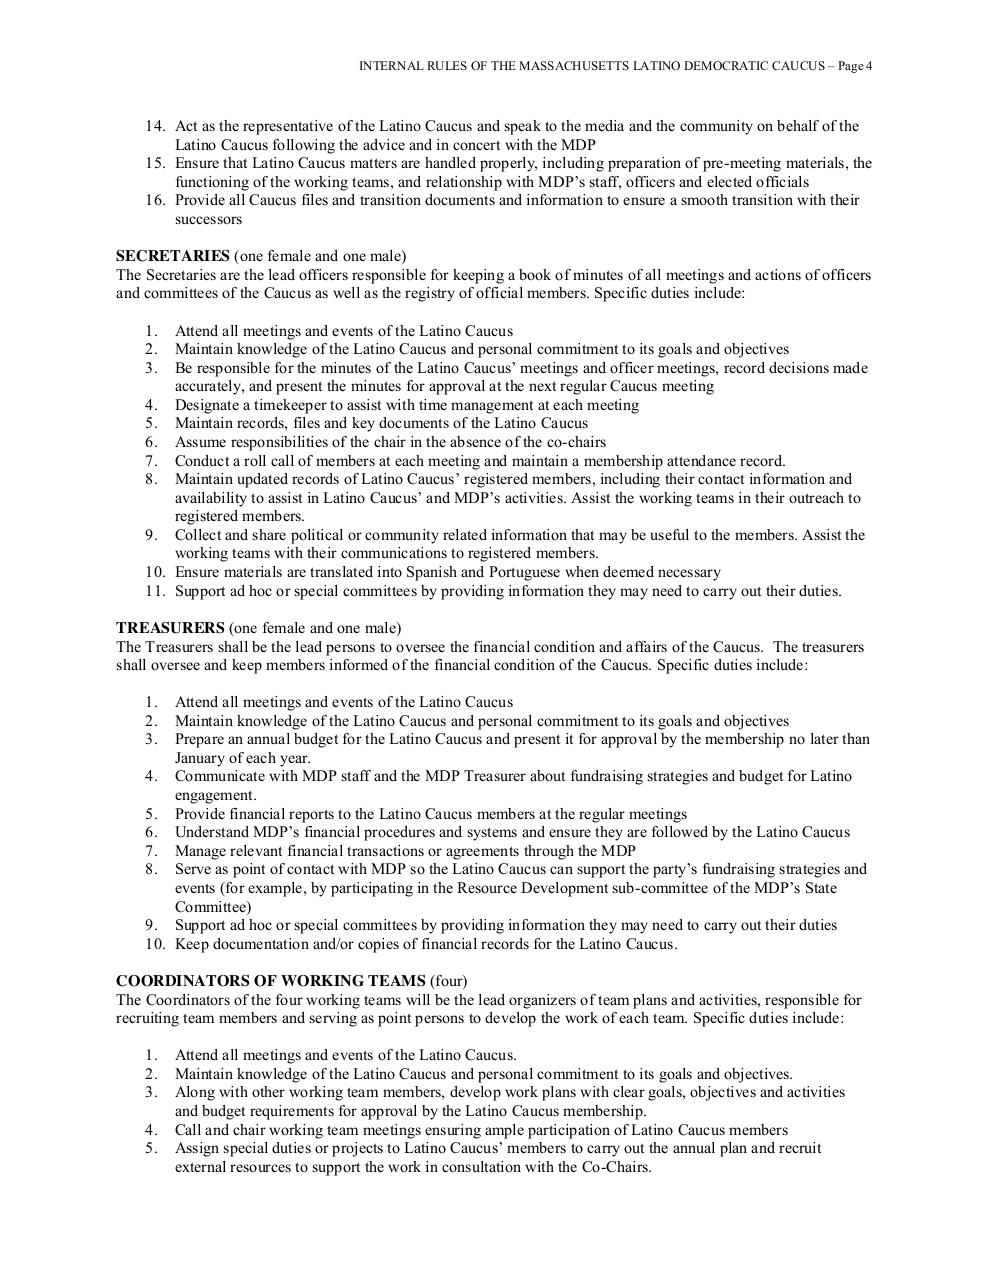 MA Latino Democratic Caucus  -Internal Rules - Final.pdf - page 4/6